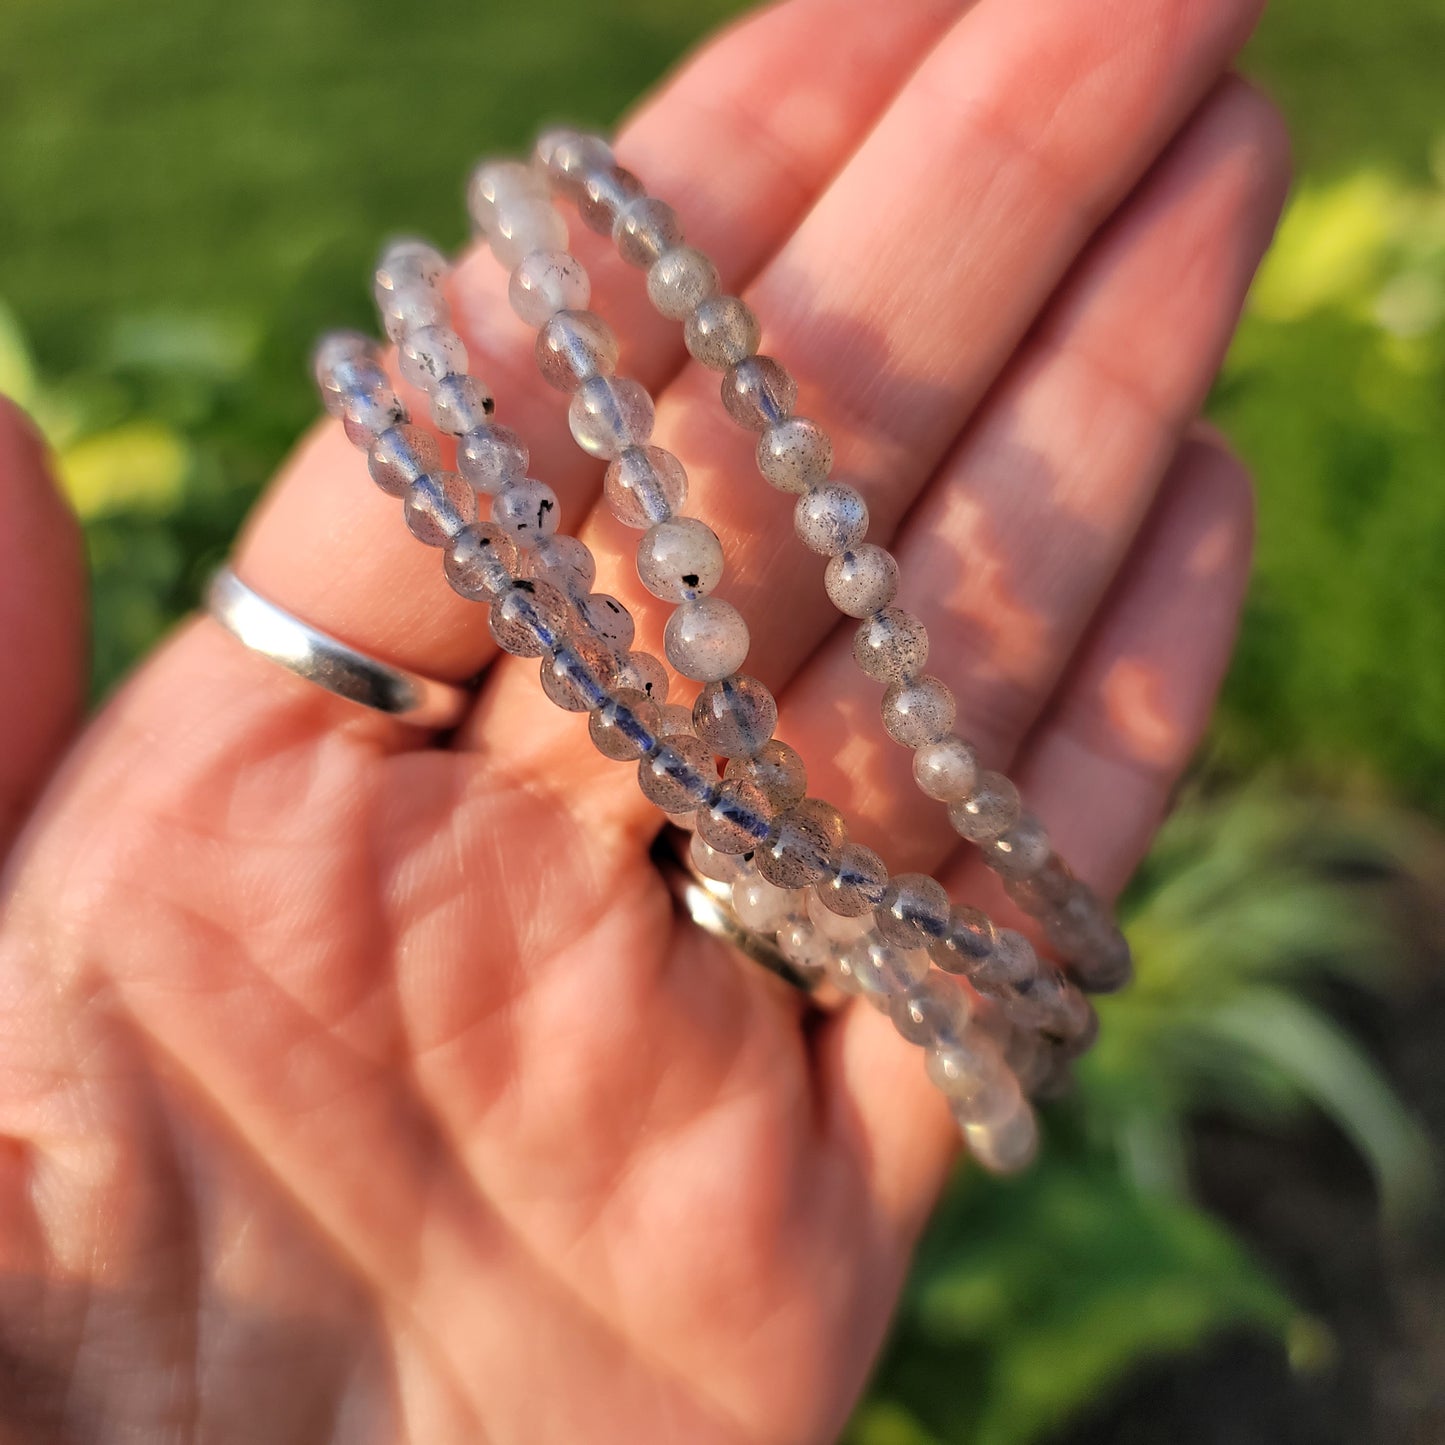 Labradorite Bracelet - 4mm Beads - Protection, transformation, mental clarity